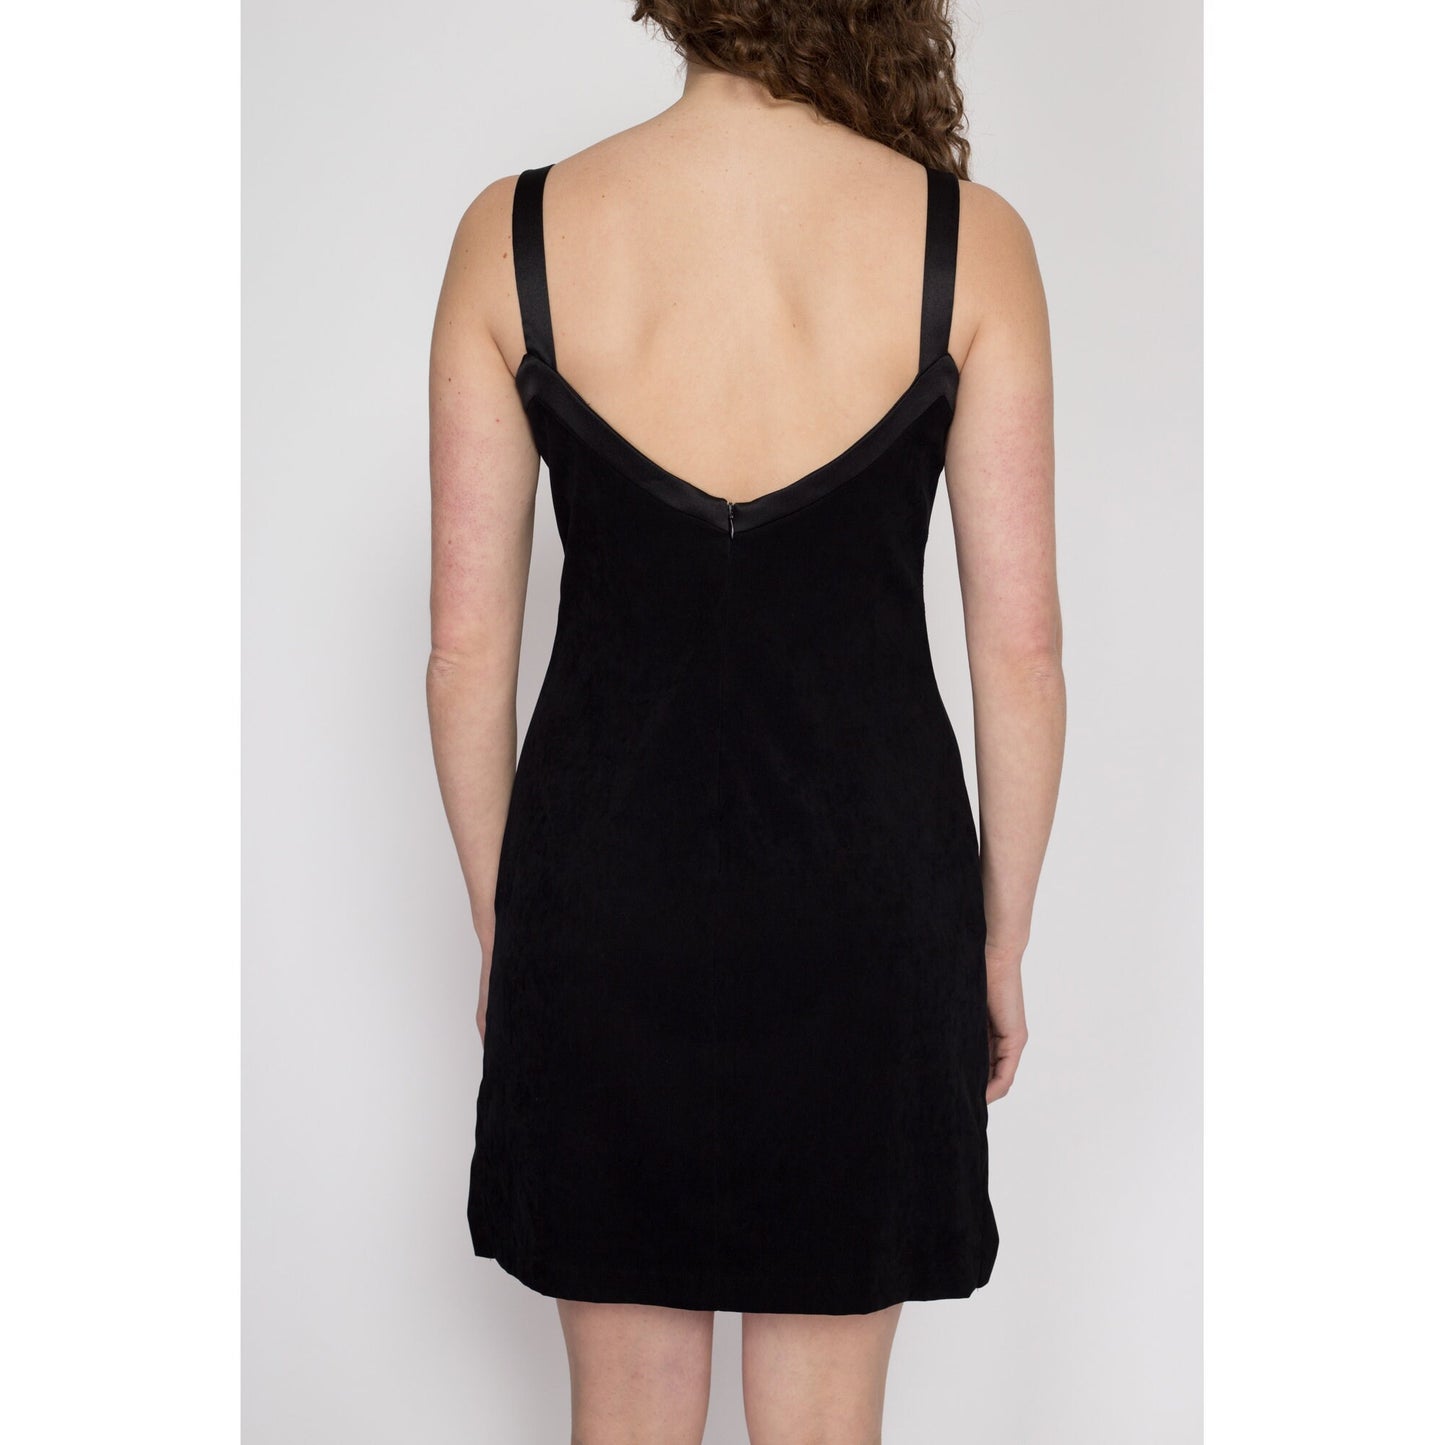 Medium 90s Black Ultrasuede Low Back Mini Cocktail Dress | Vintage Sleeveless Square Neck A Line Party Dress